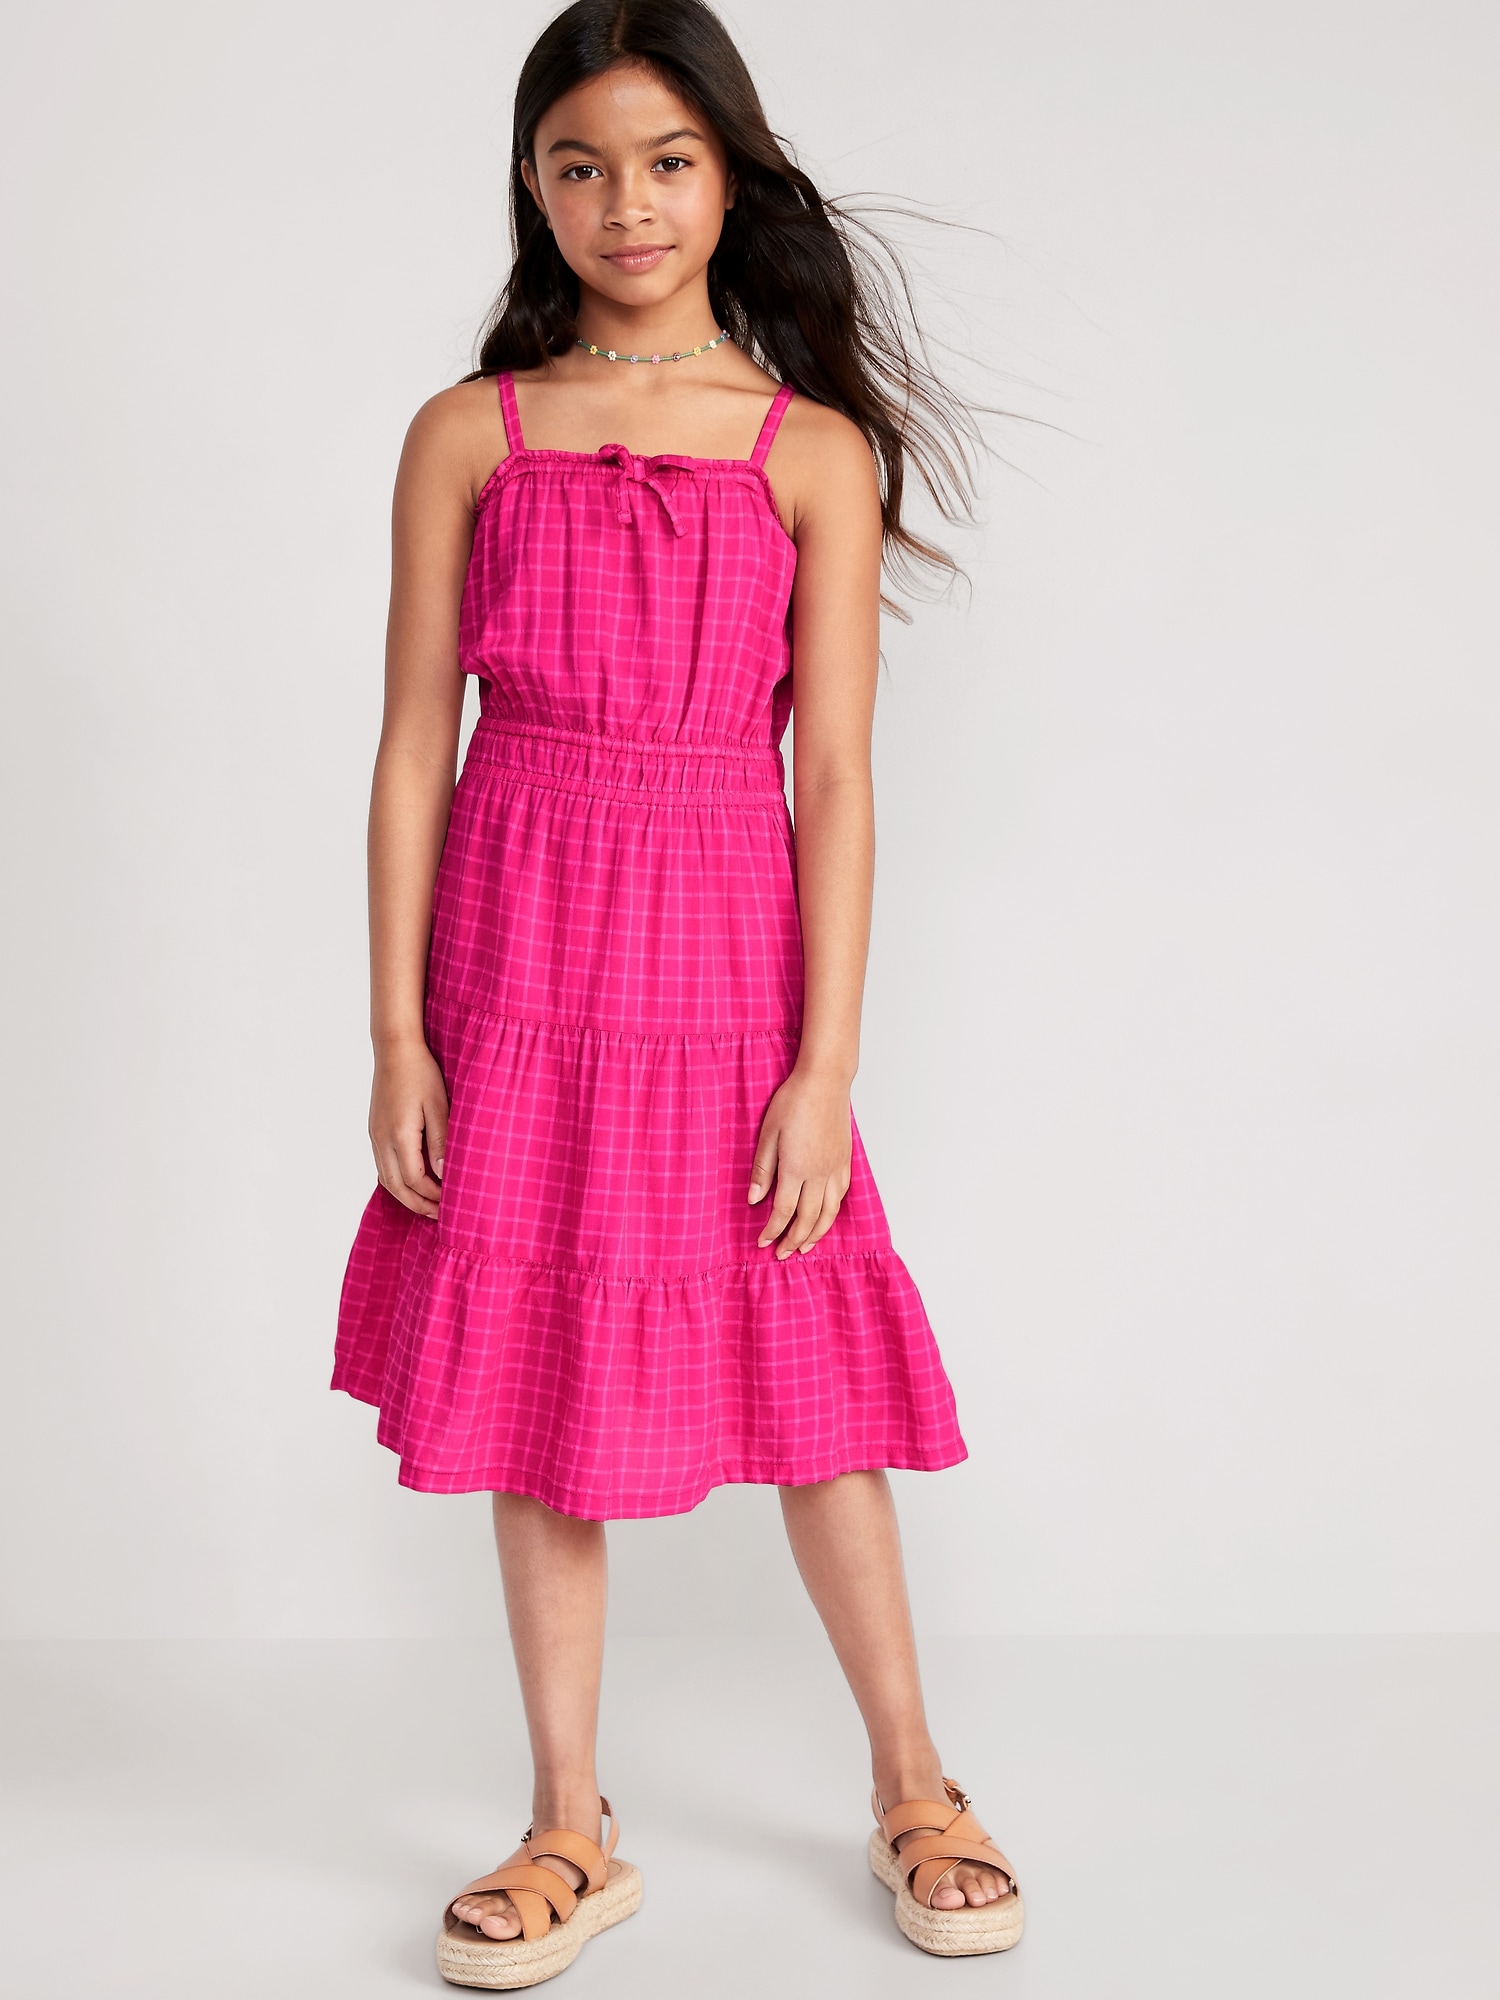 Old Navy Sleeveless Ruffle Trim Midi Dress for Girls pink. 1